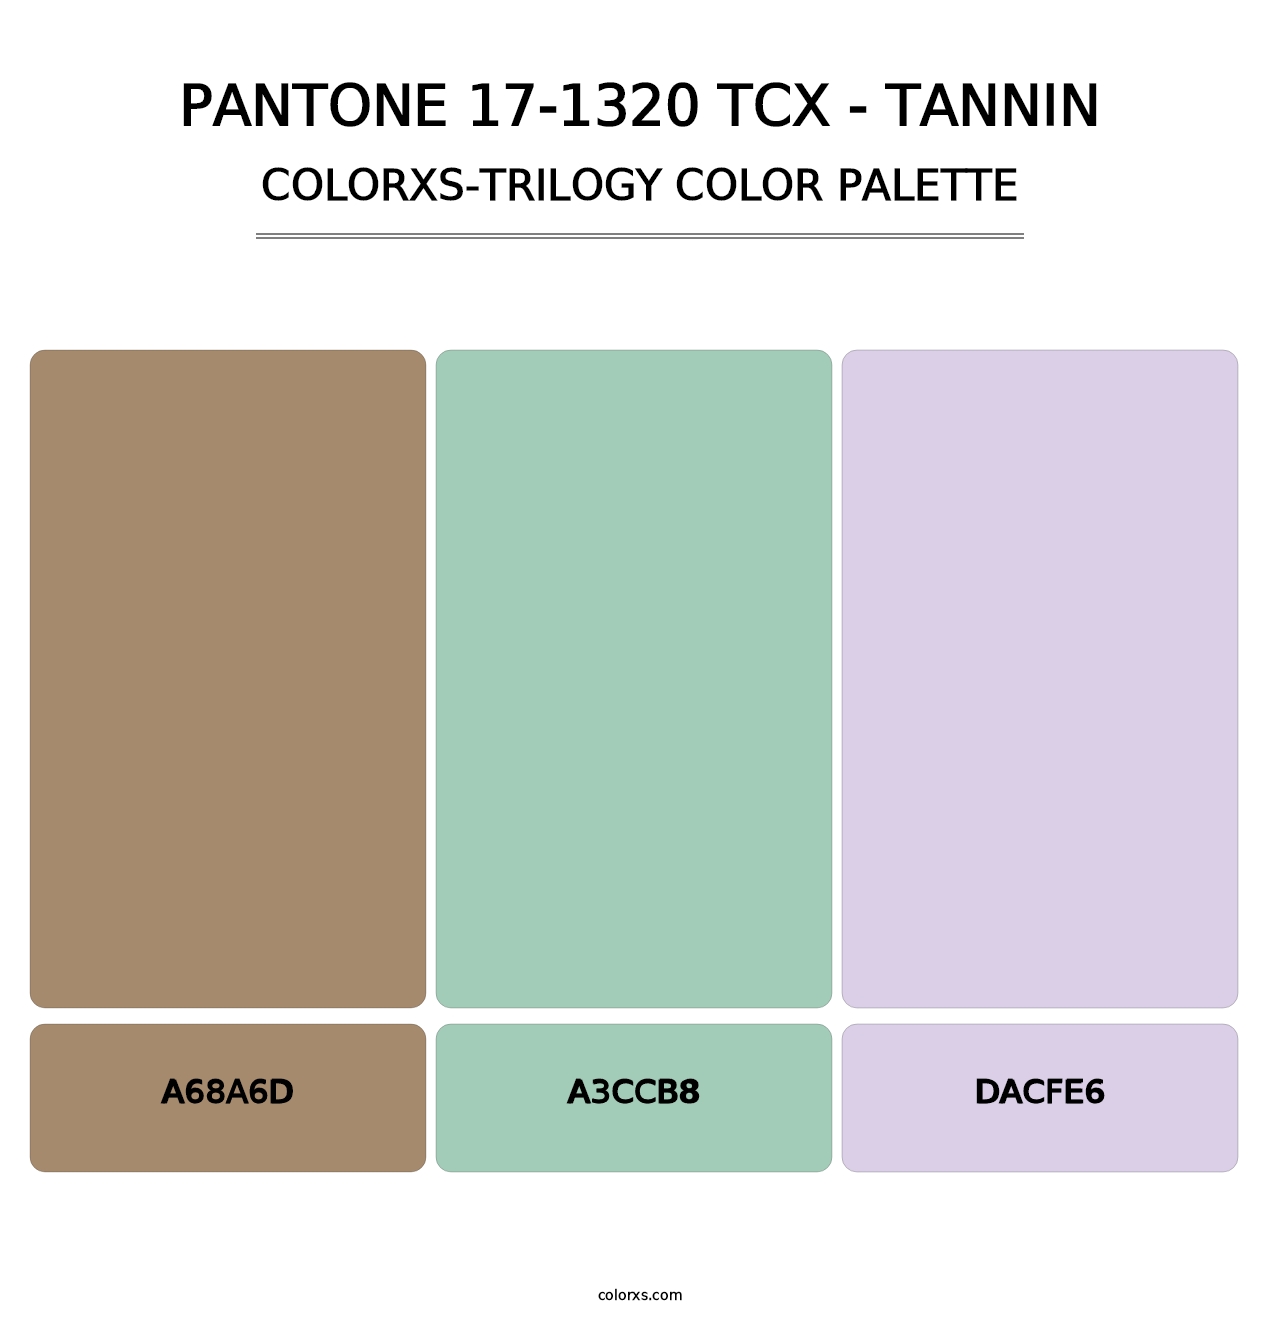 PANTONE 17-1320 TCX - Tannin - Colorxs Trilogy Palette